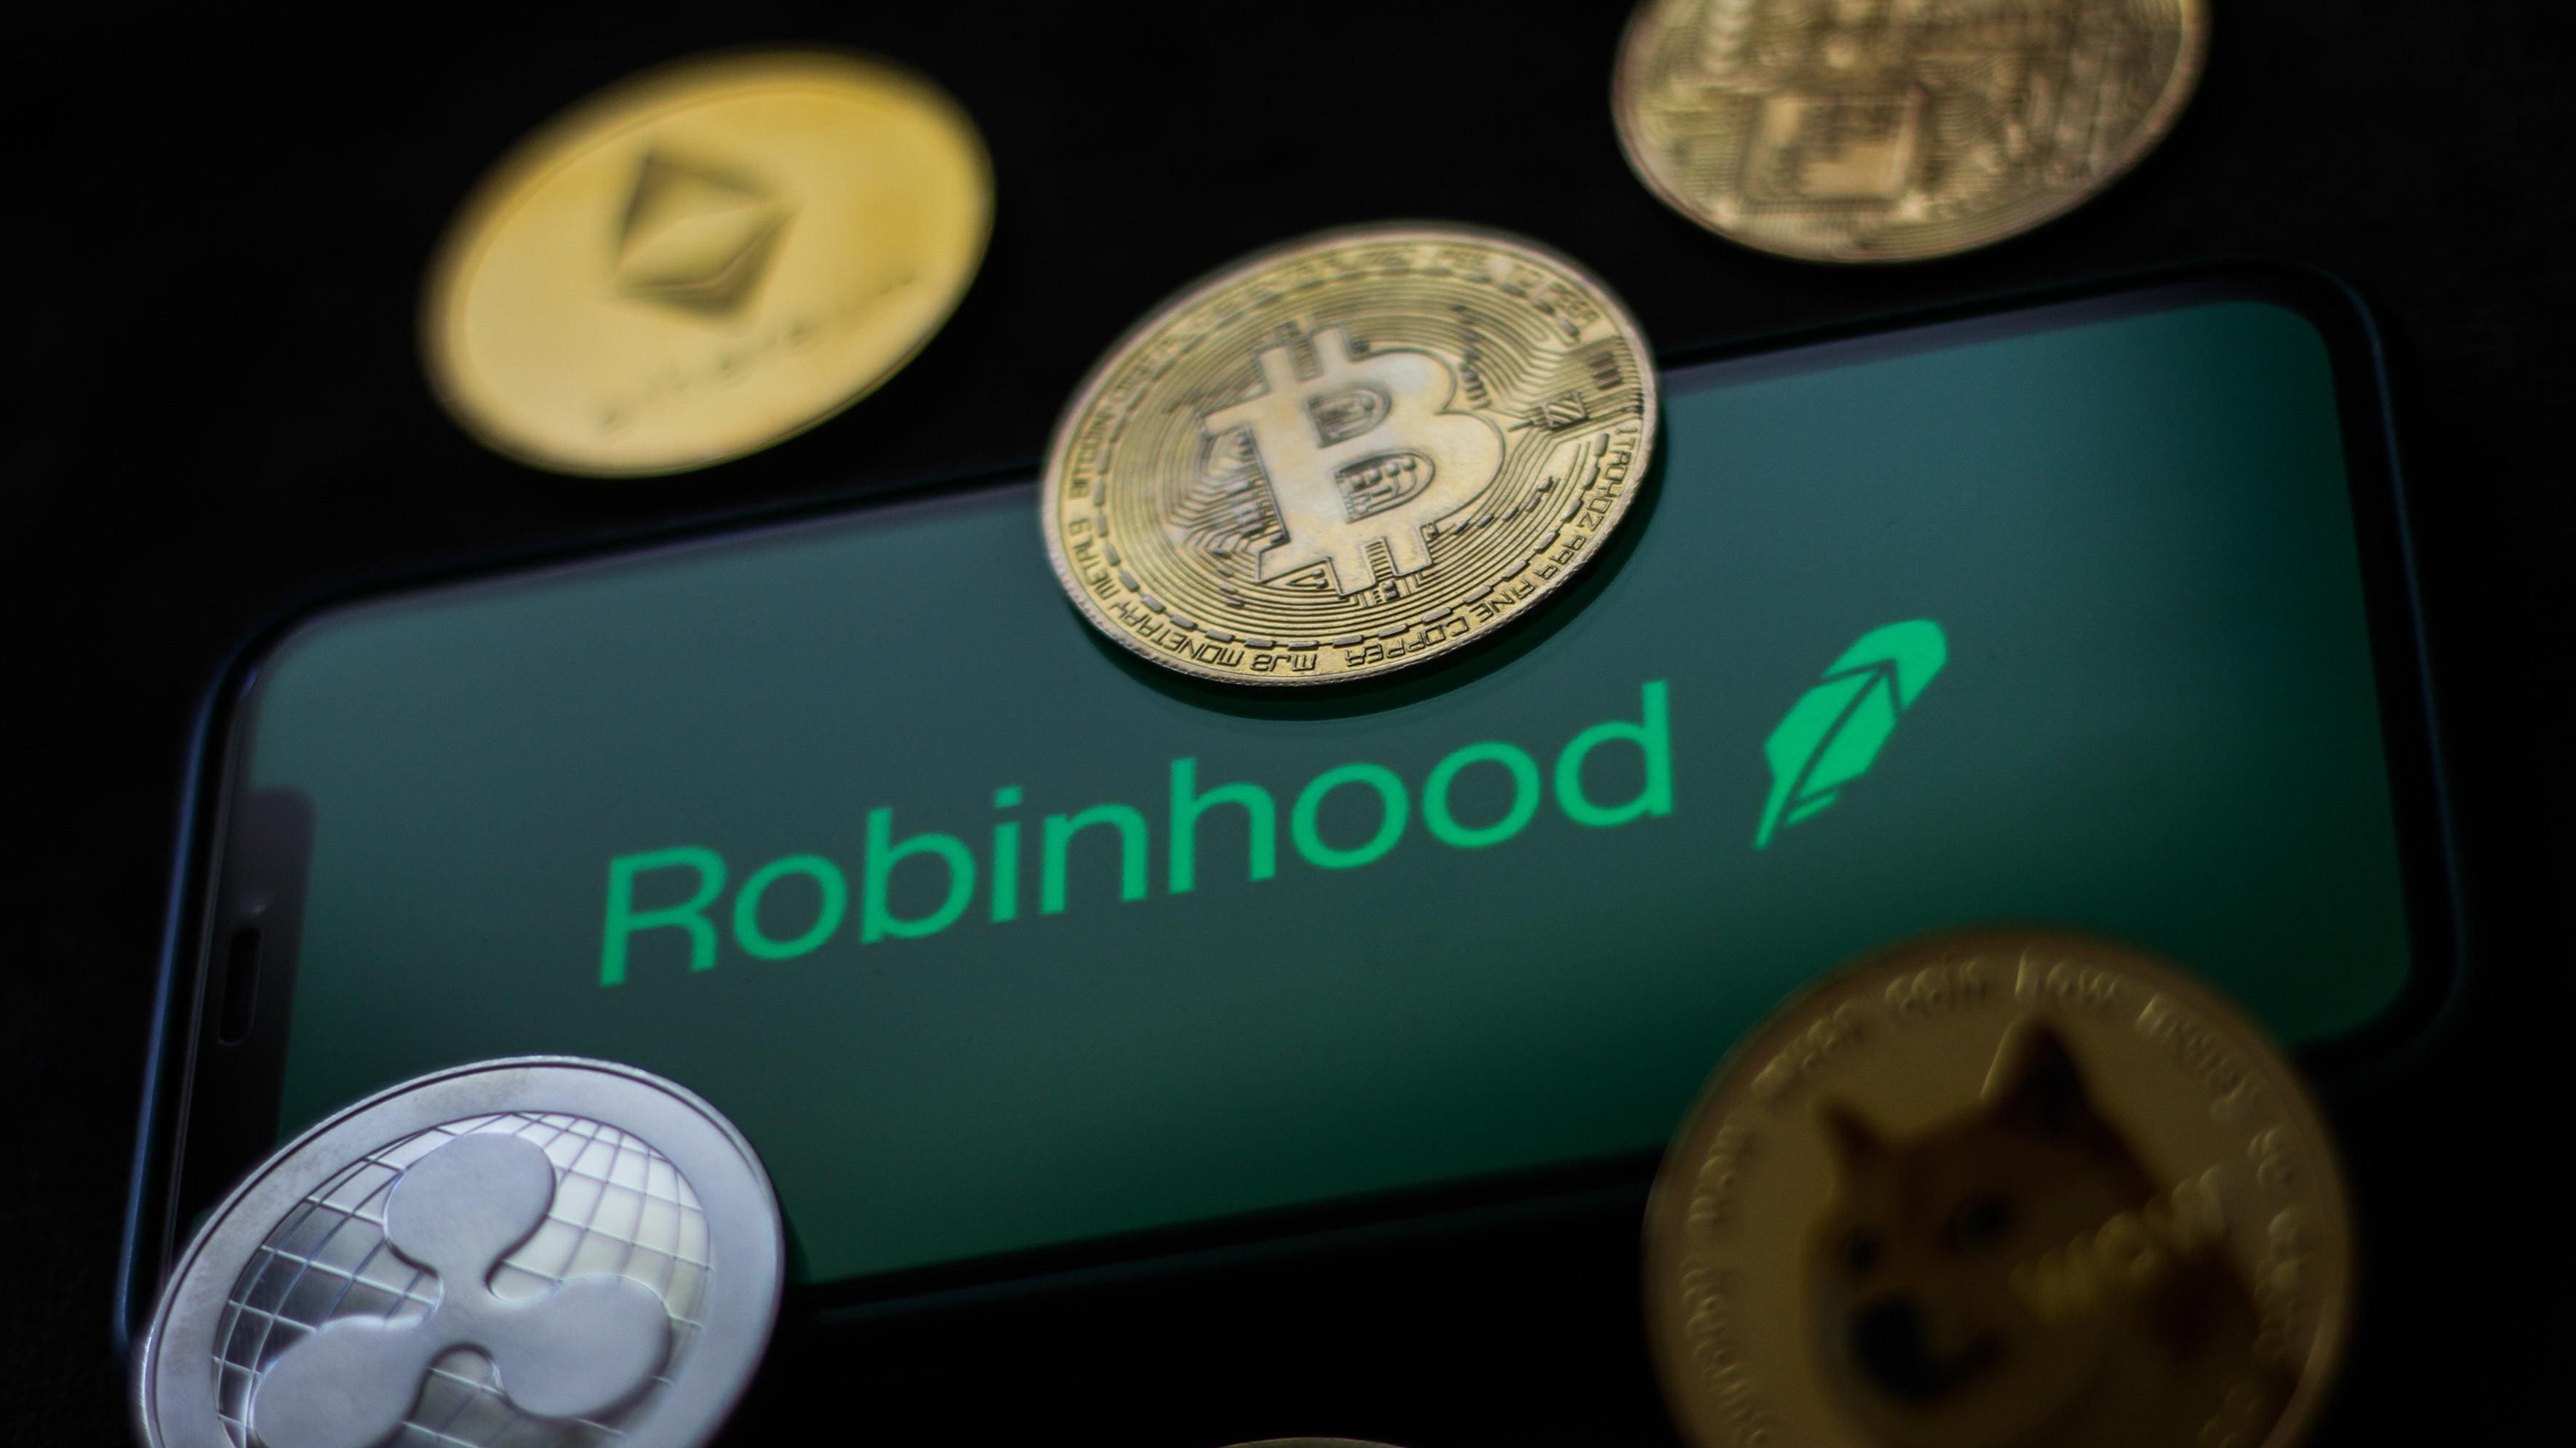 Robinhood Markets - Wikipedia